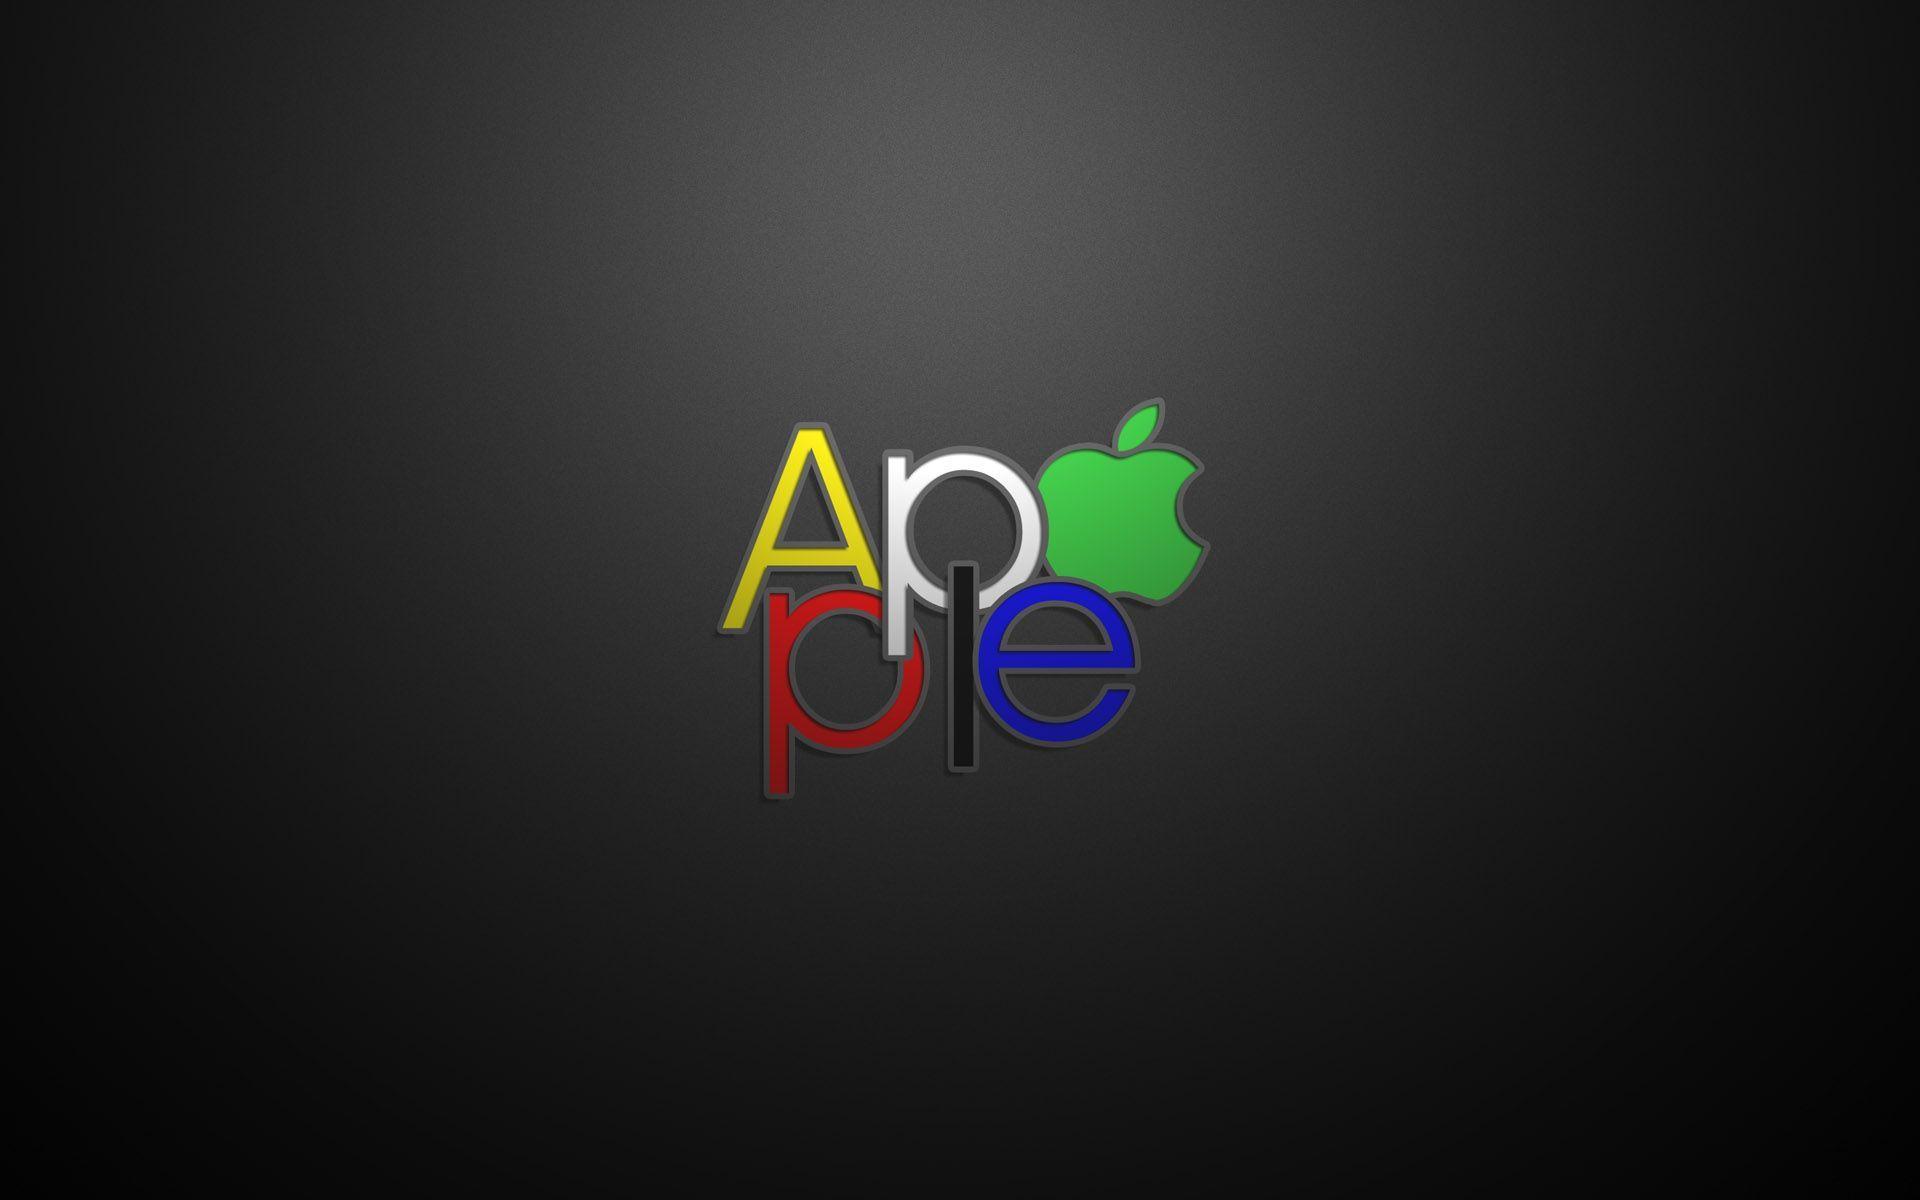 Apple HD Wallpaper for PC. fbpapa